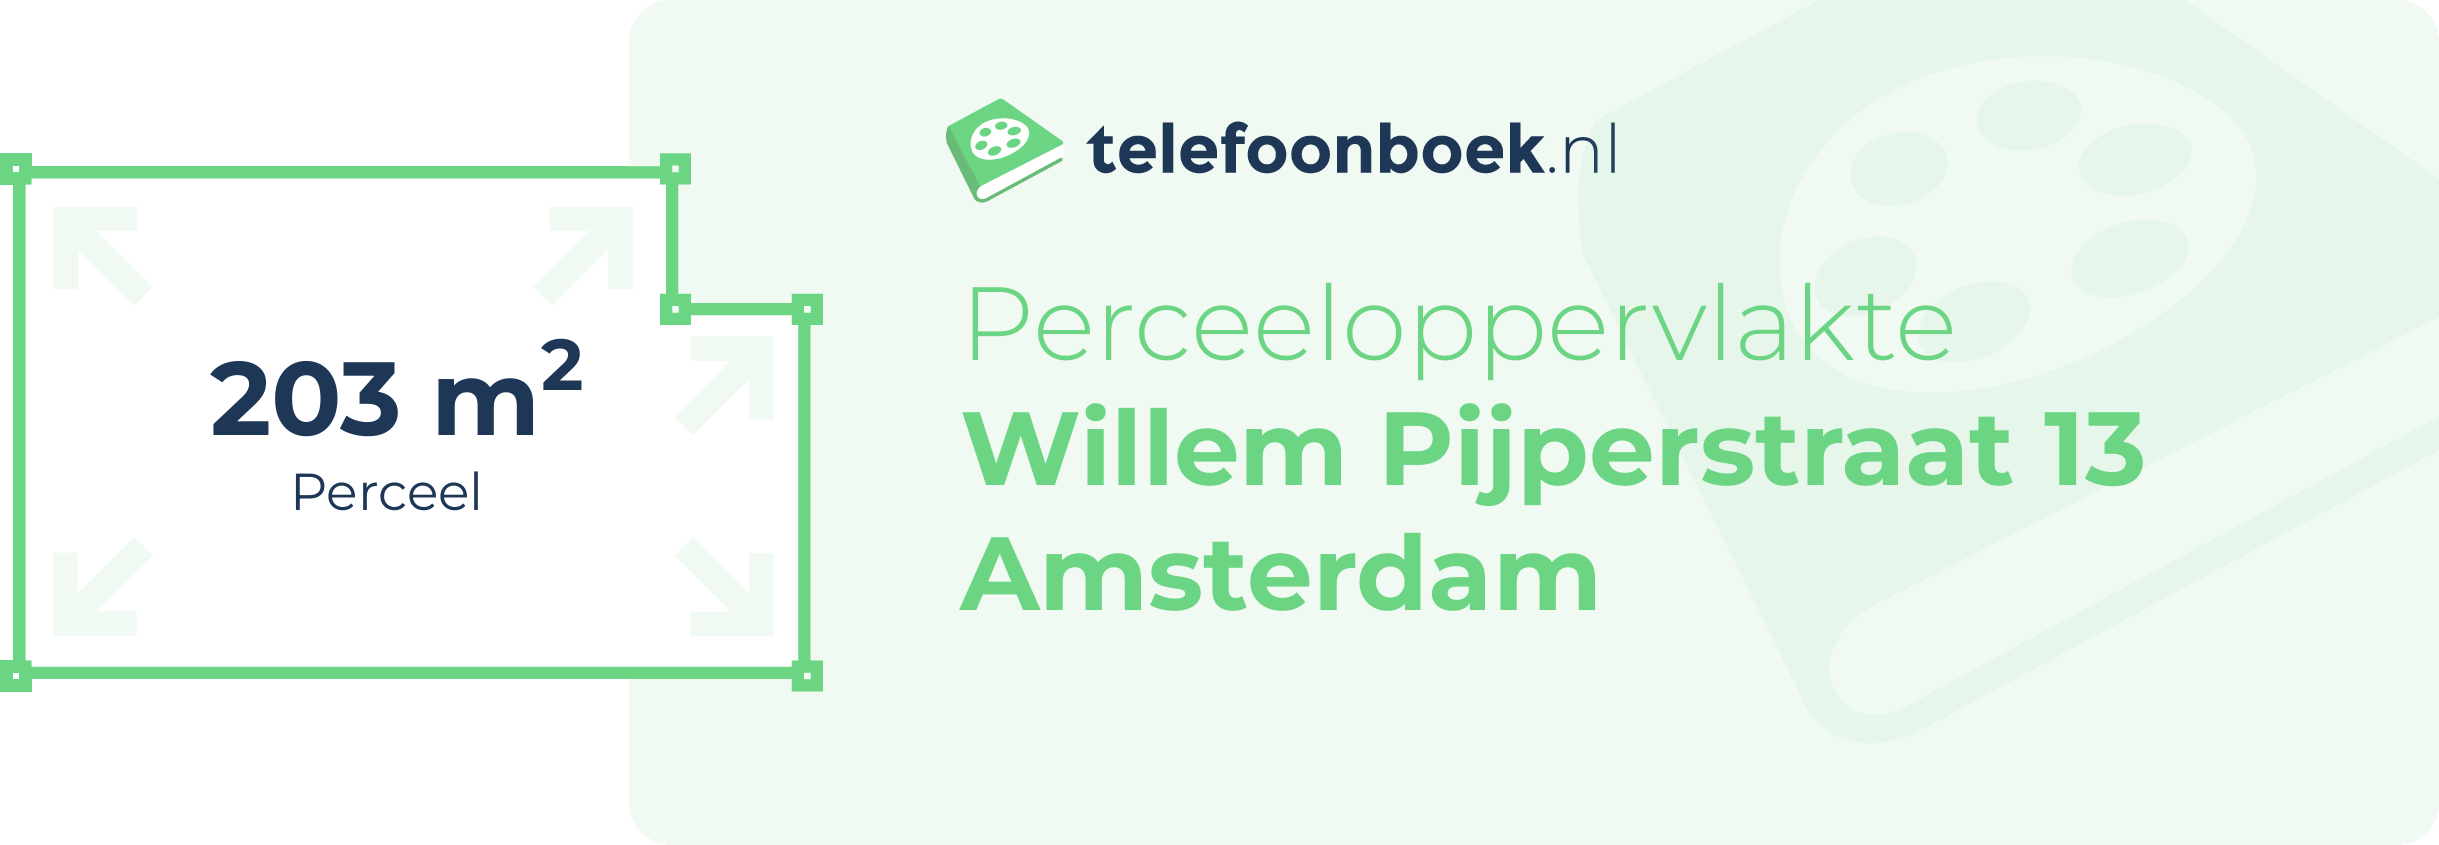 Perceeloppervlakte Willem Pijperstraat 13 Amsterdam